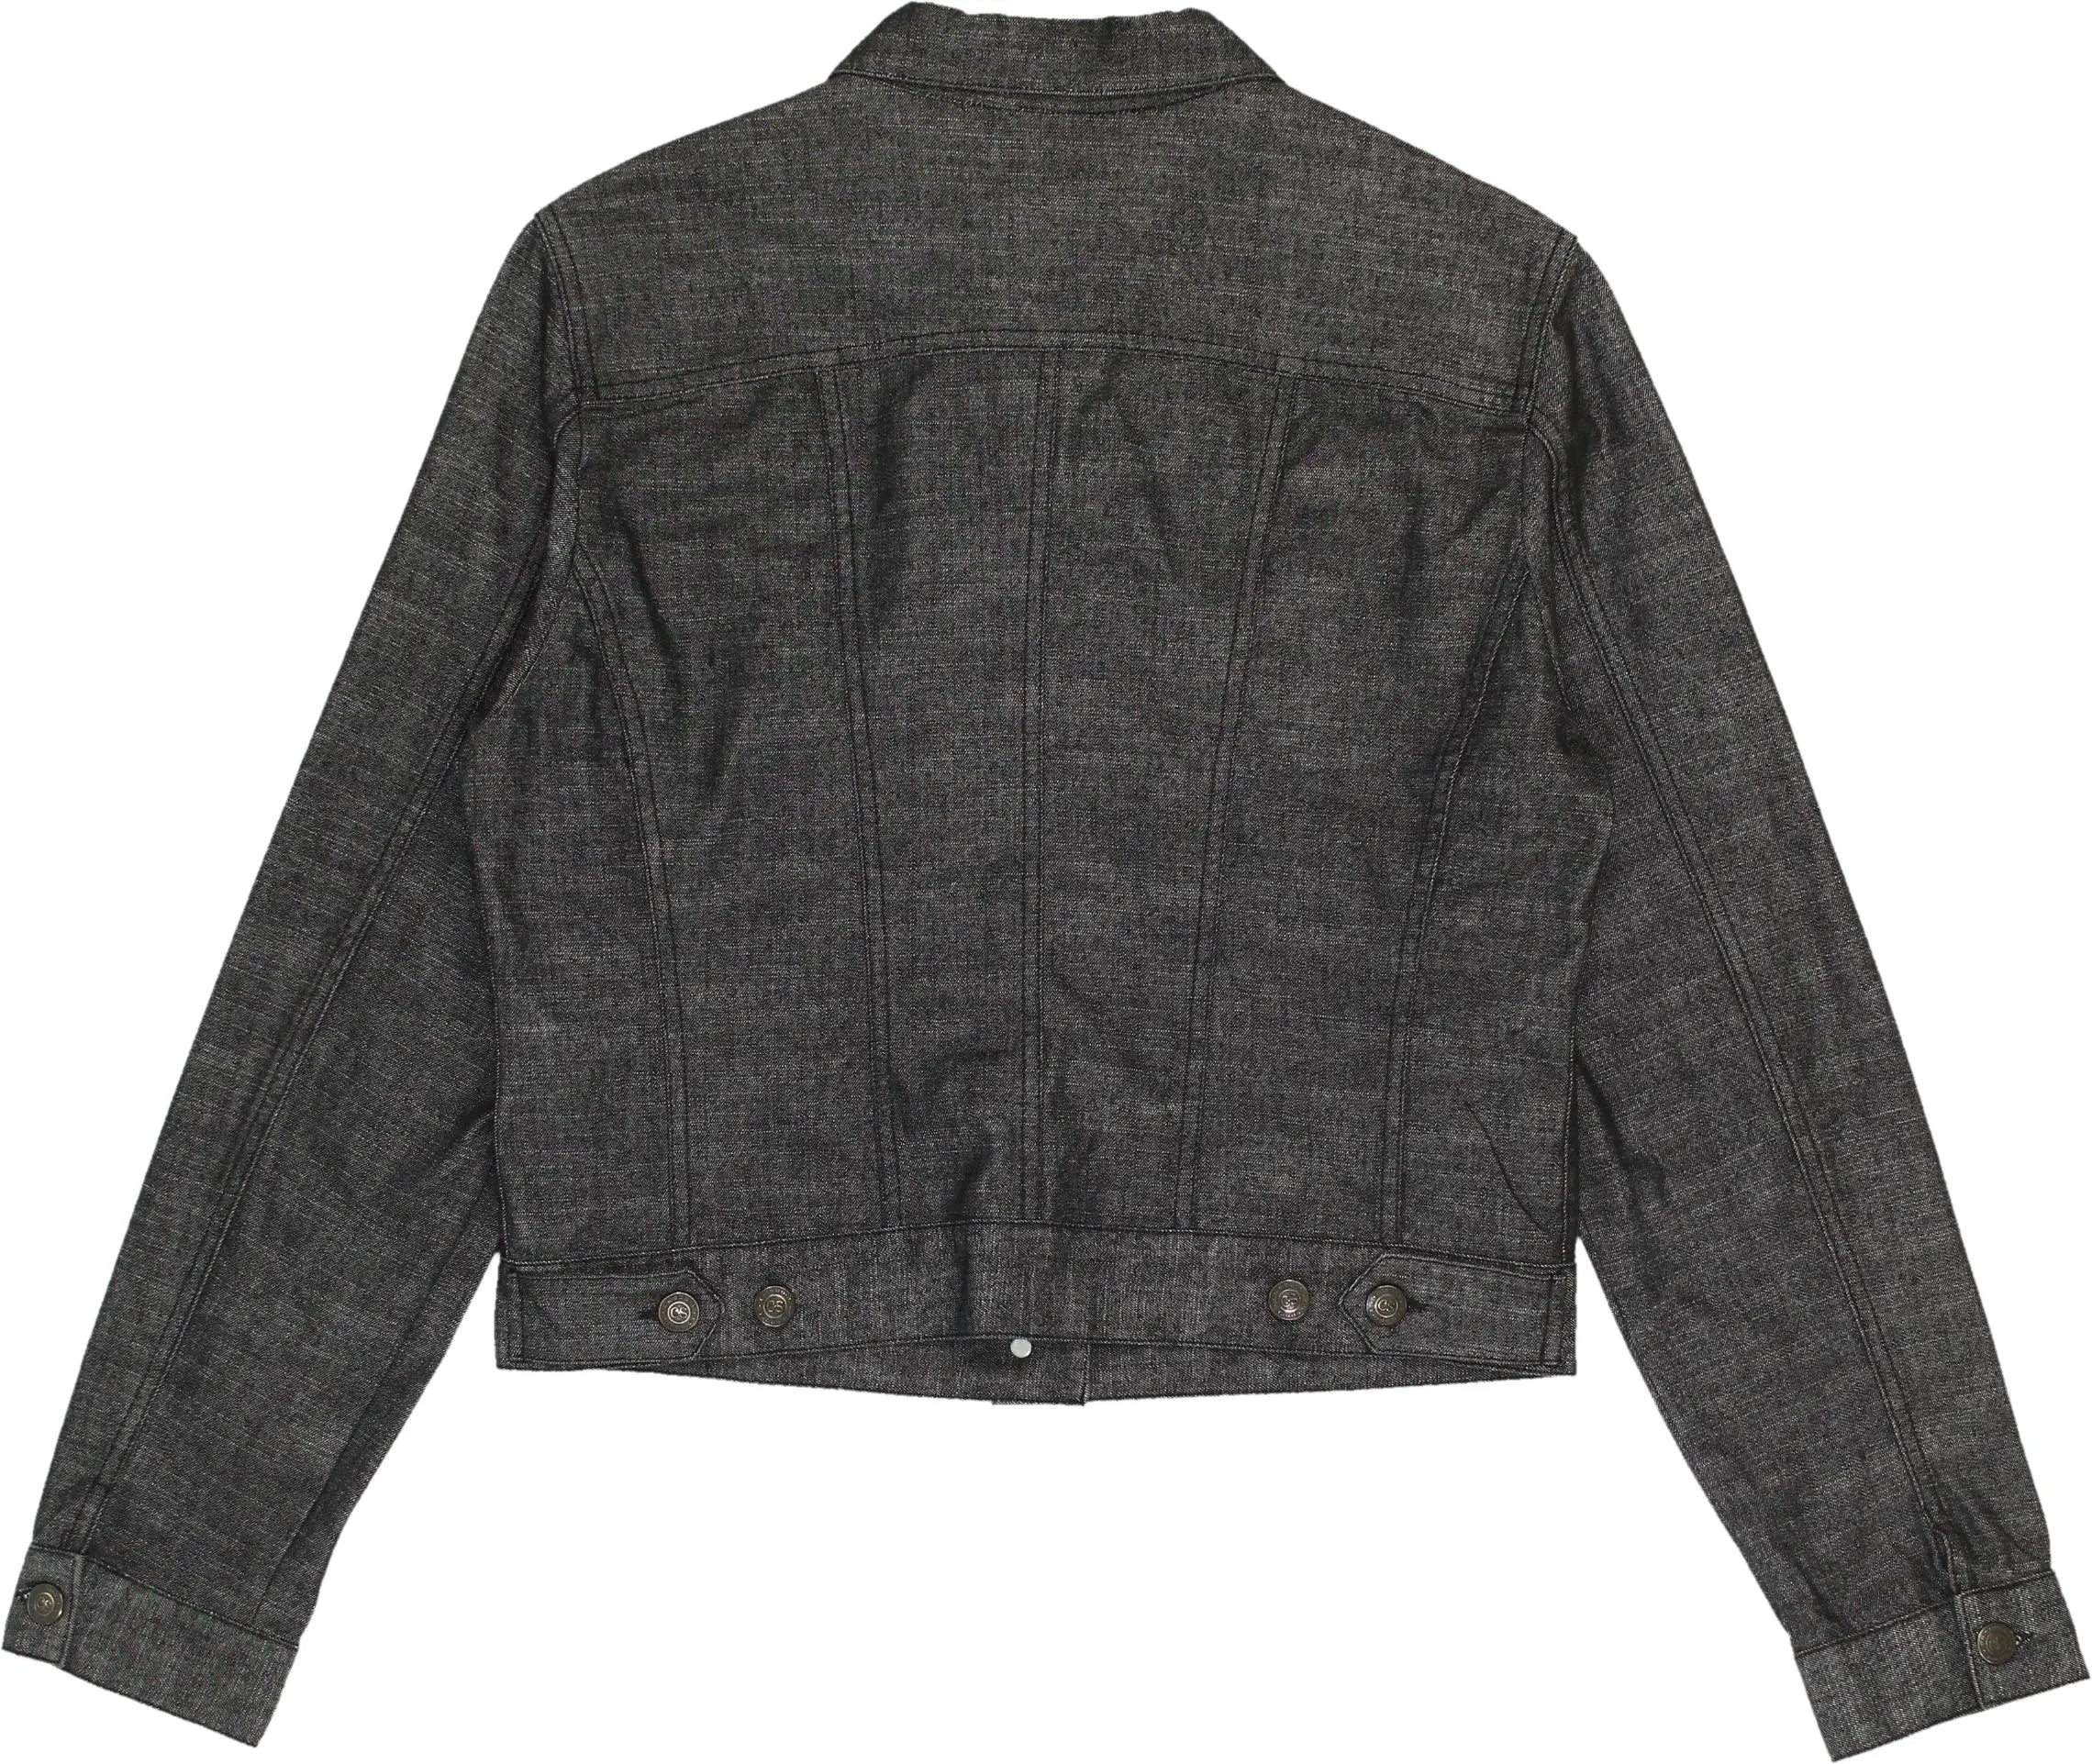 CS Sport - Grey Denim Jacket- ThriftTale.com - Vintage and second handclothing